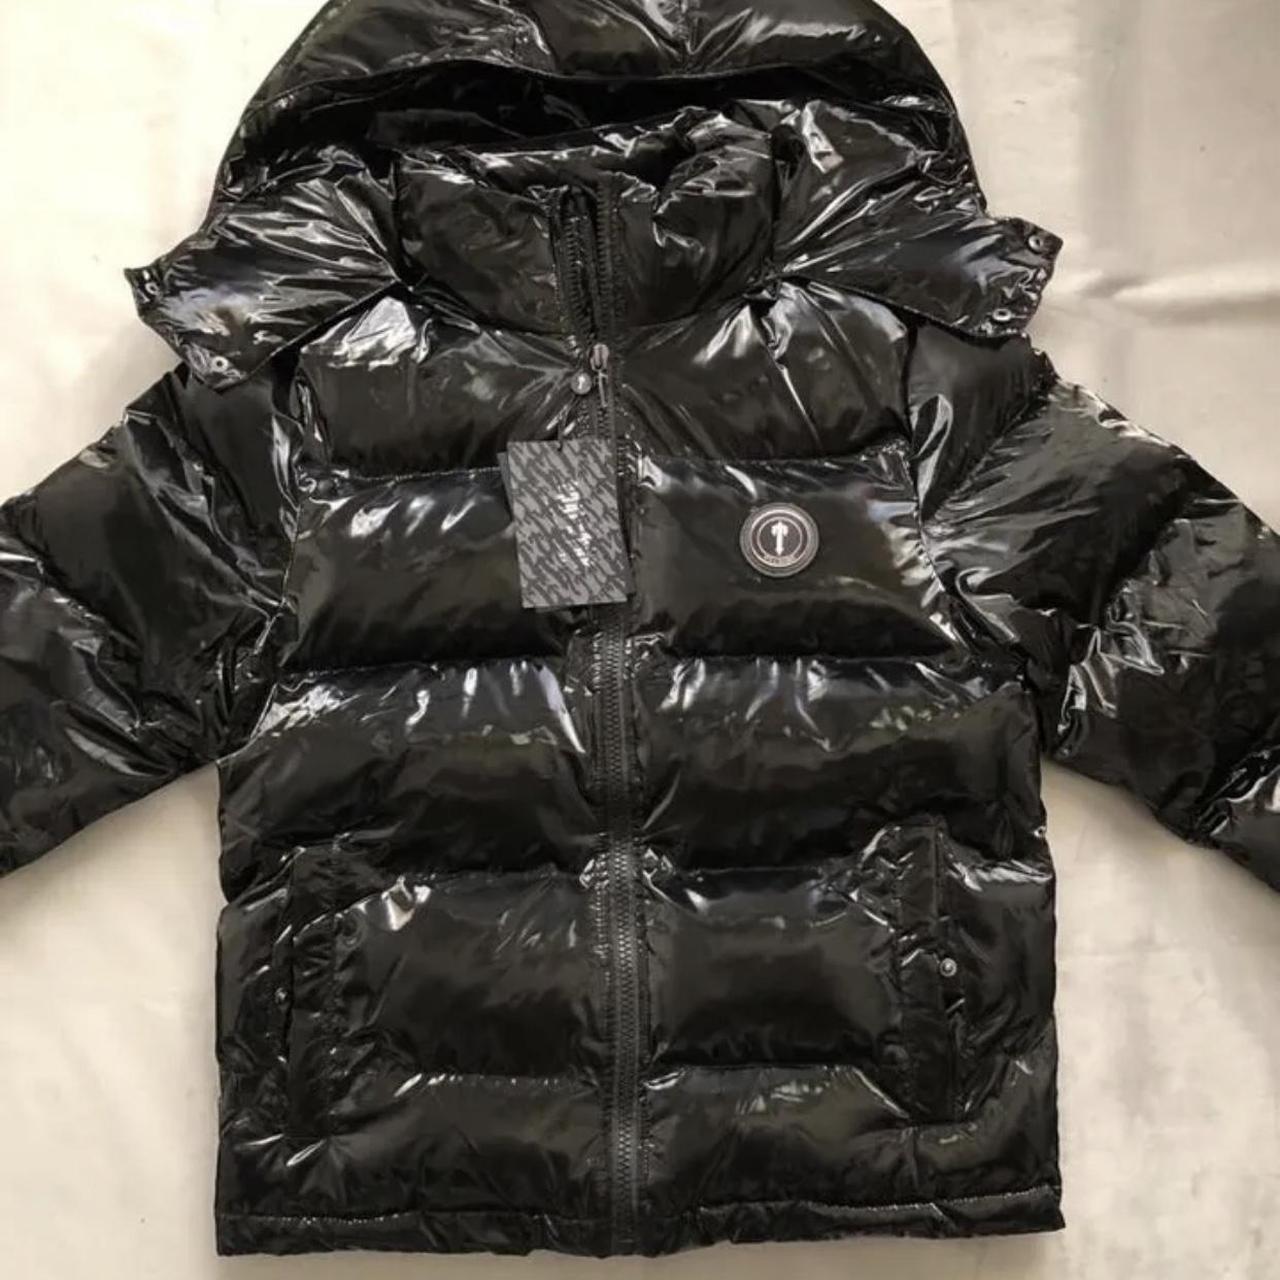 Shiny trapstar jacket message before buying - Depop